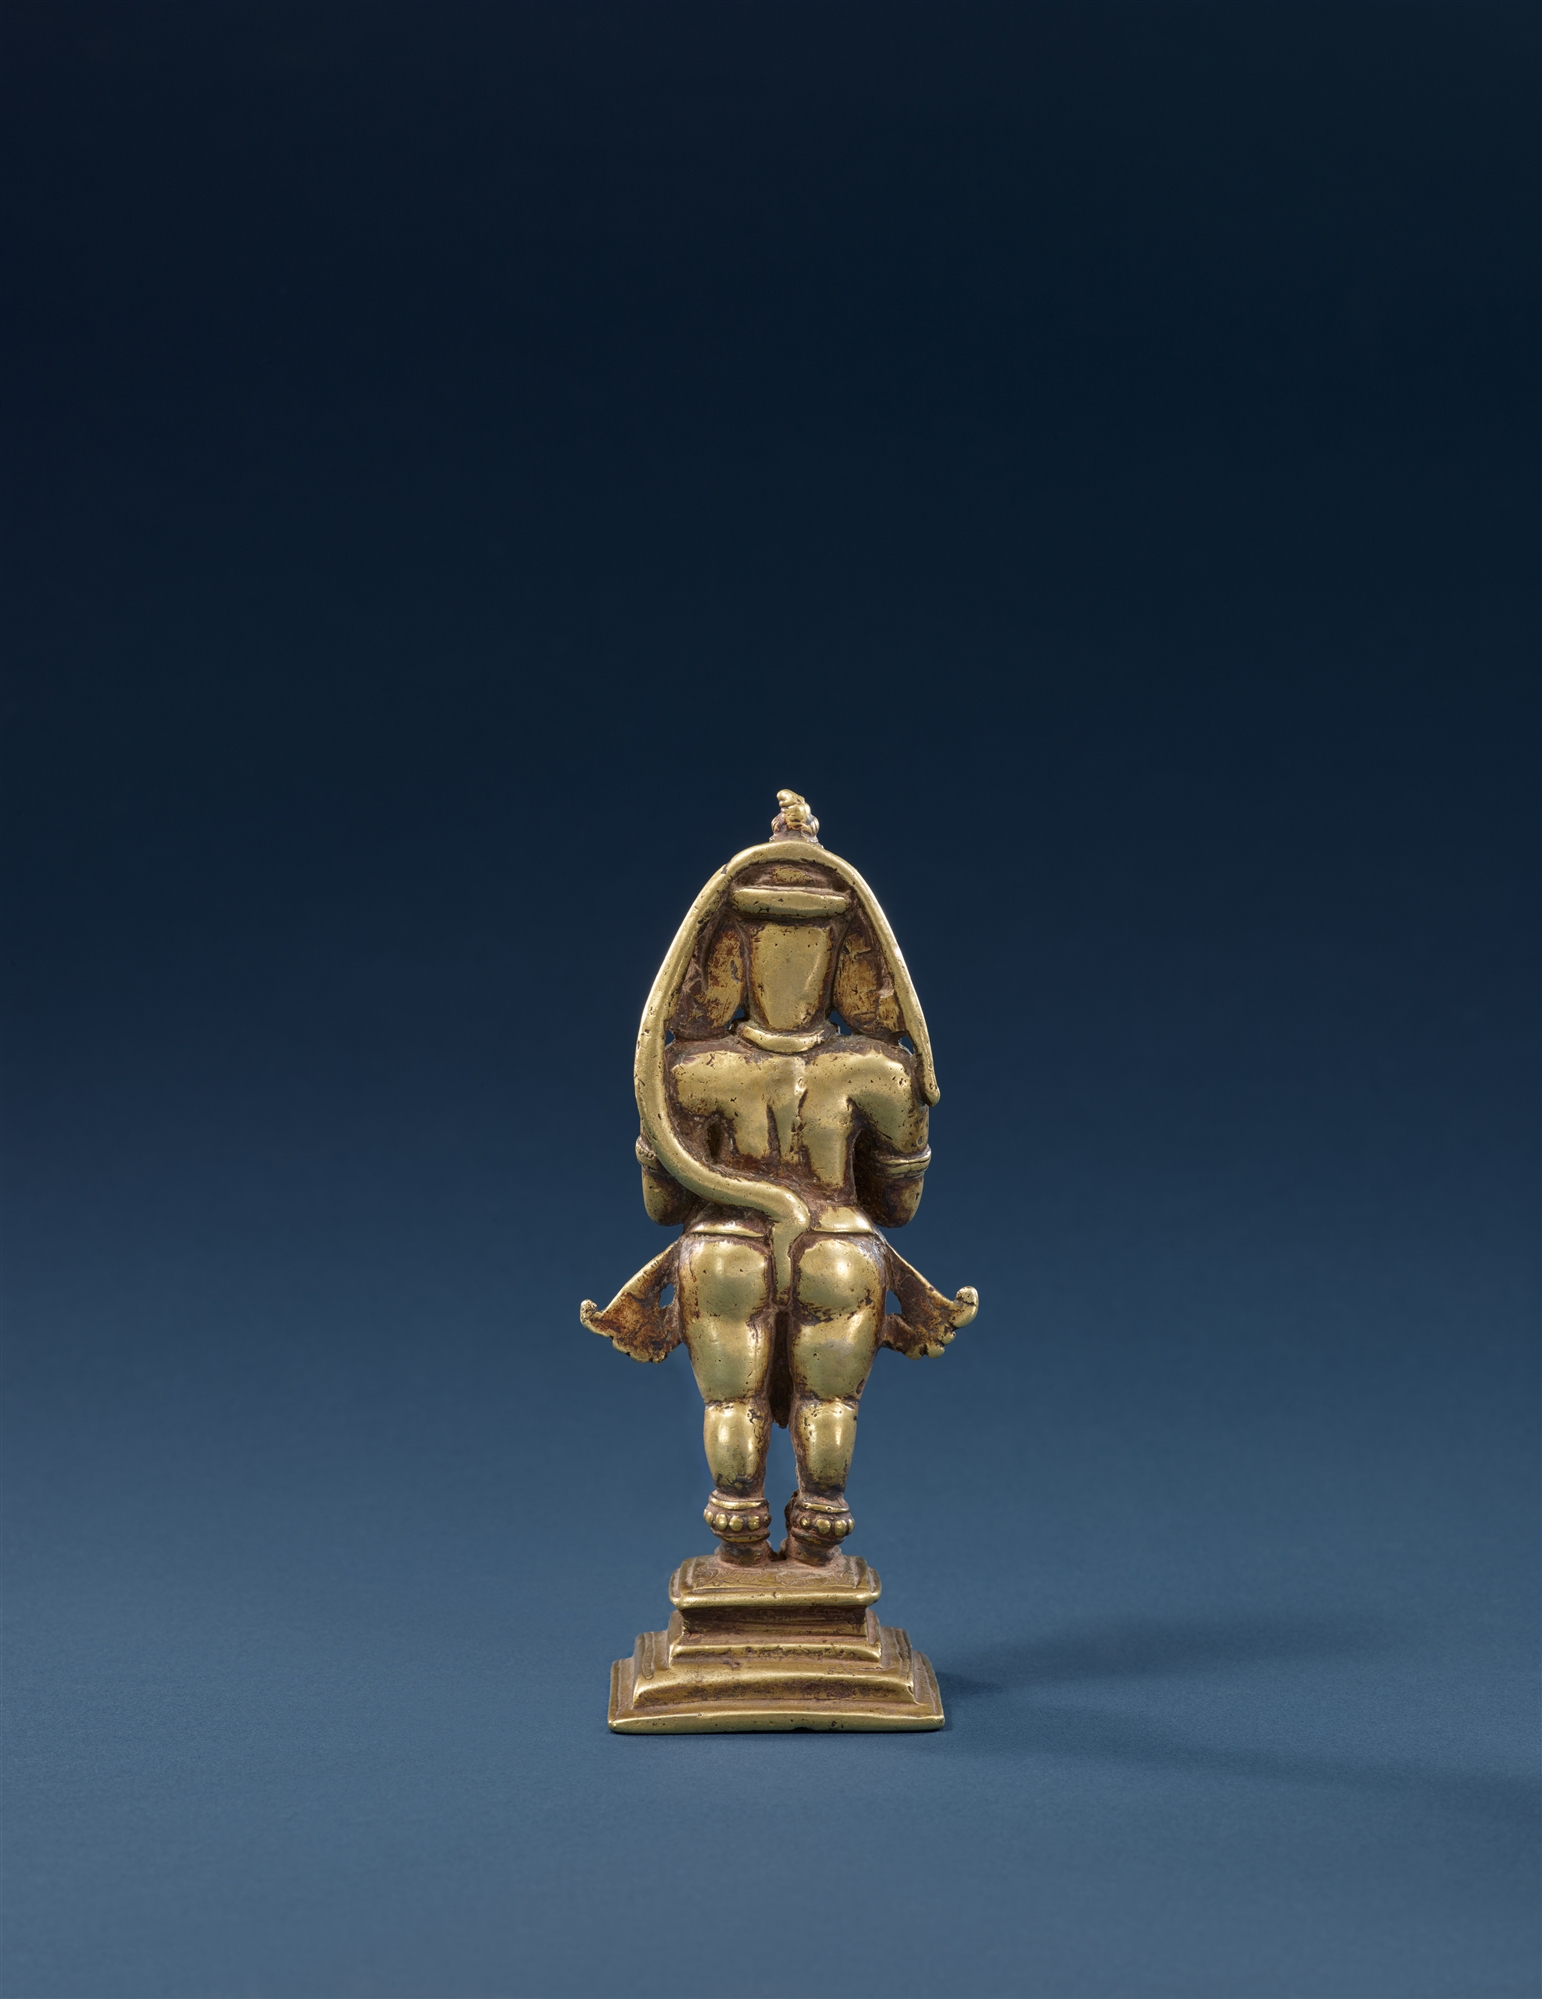 A Maharashtra copper alloy figure of Hanuman. Central India. 18th/19th century - Image 2 of 2